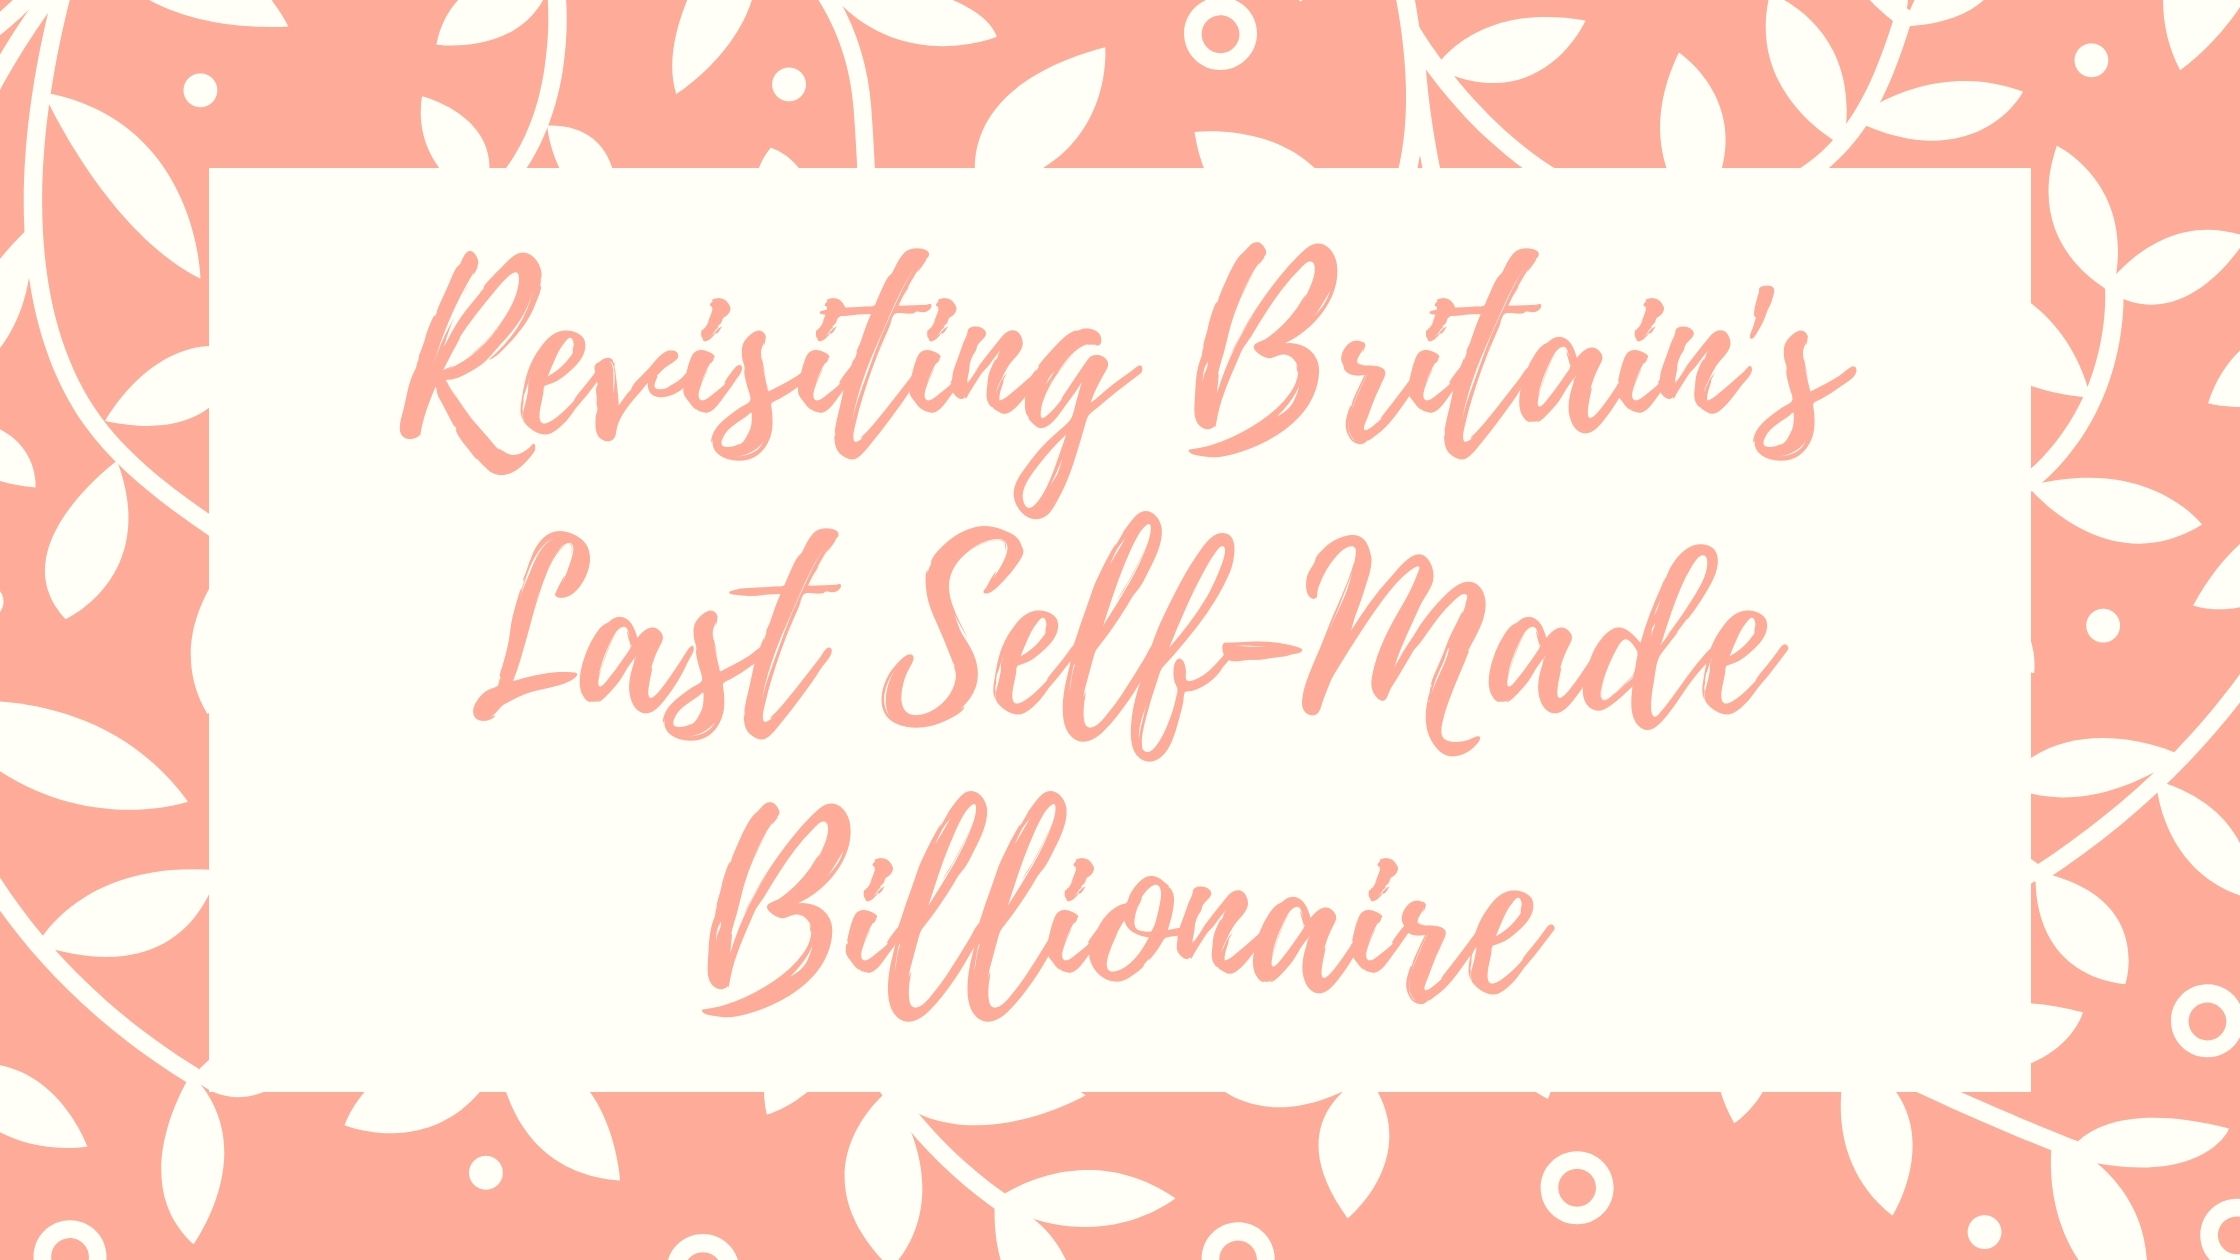 Revisiting Britain's Last Self-Made Billionaire